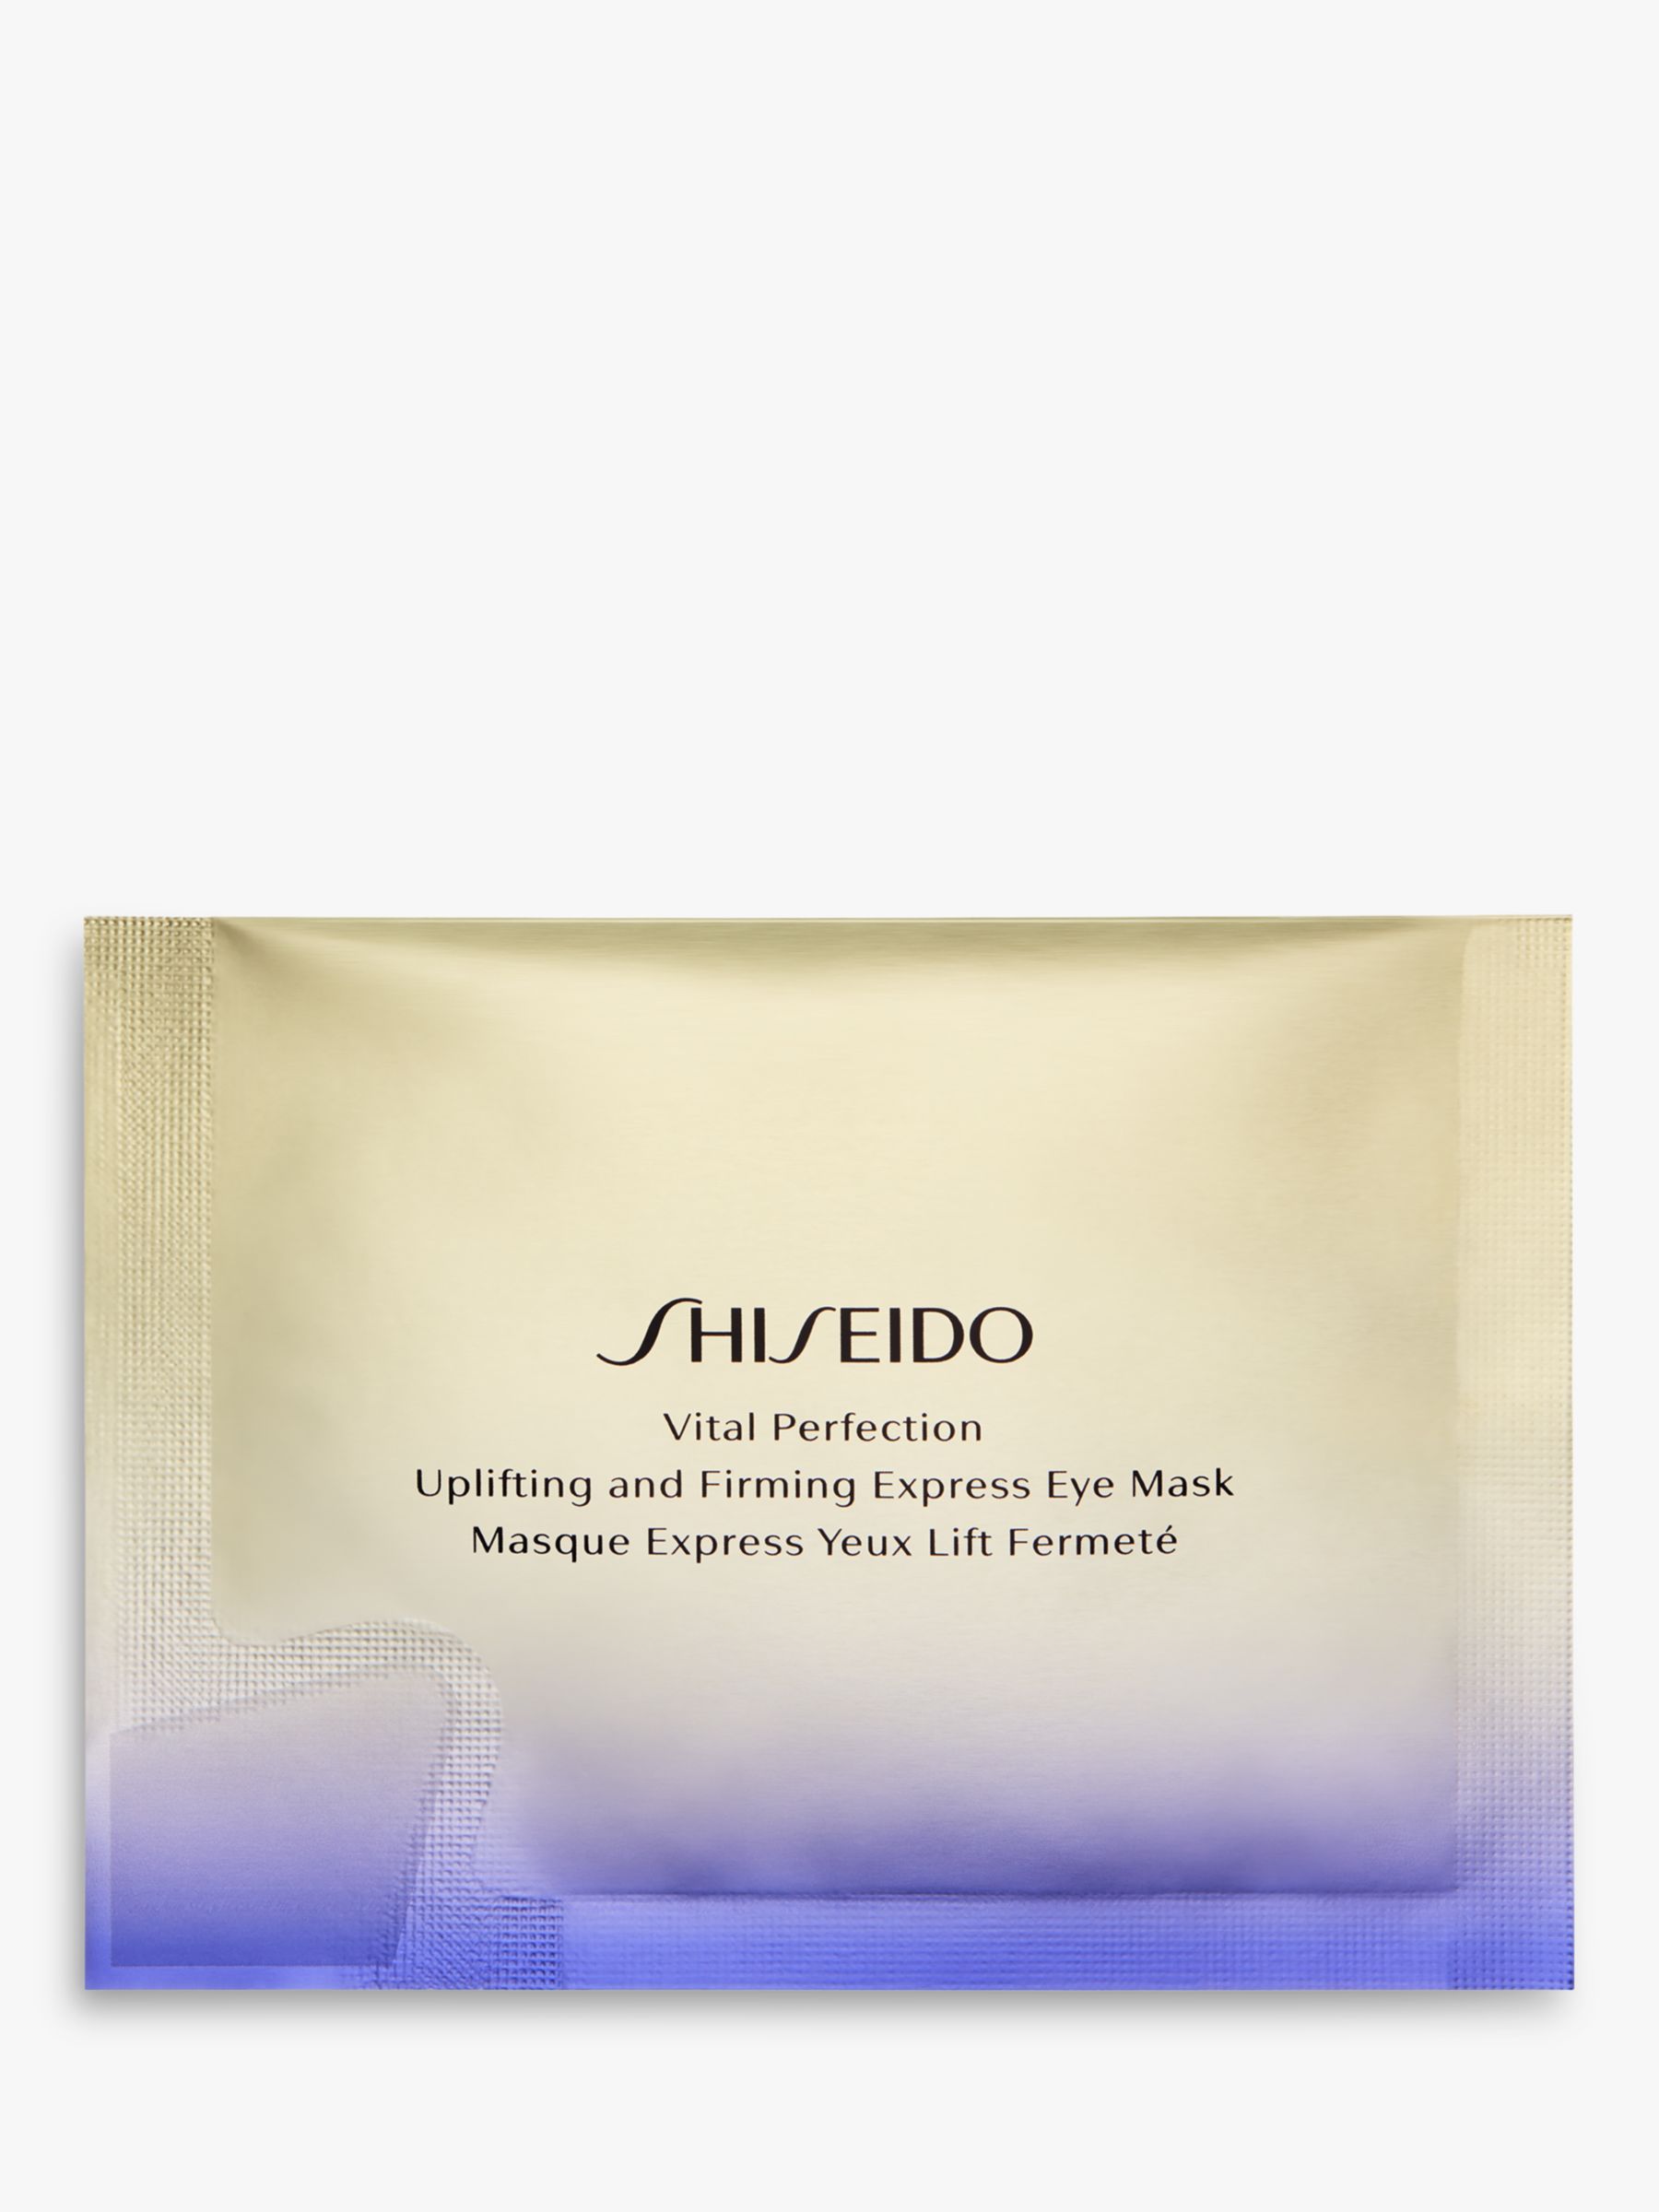 Shiseido Vital Perfection Uplifting and Firming Express Eye Mask, x 12 Sheets 1